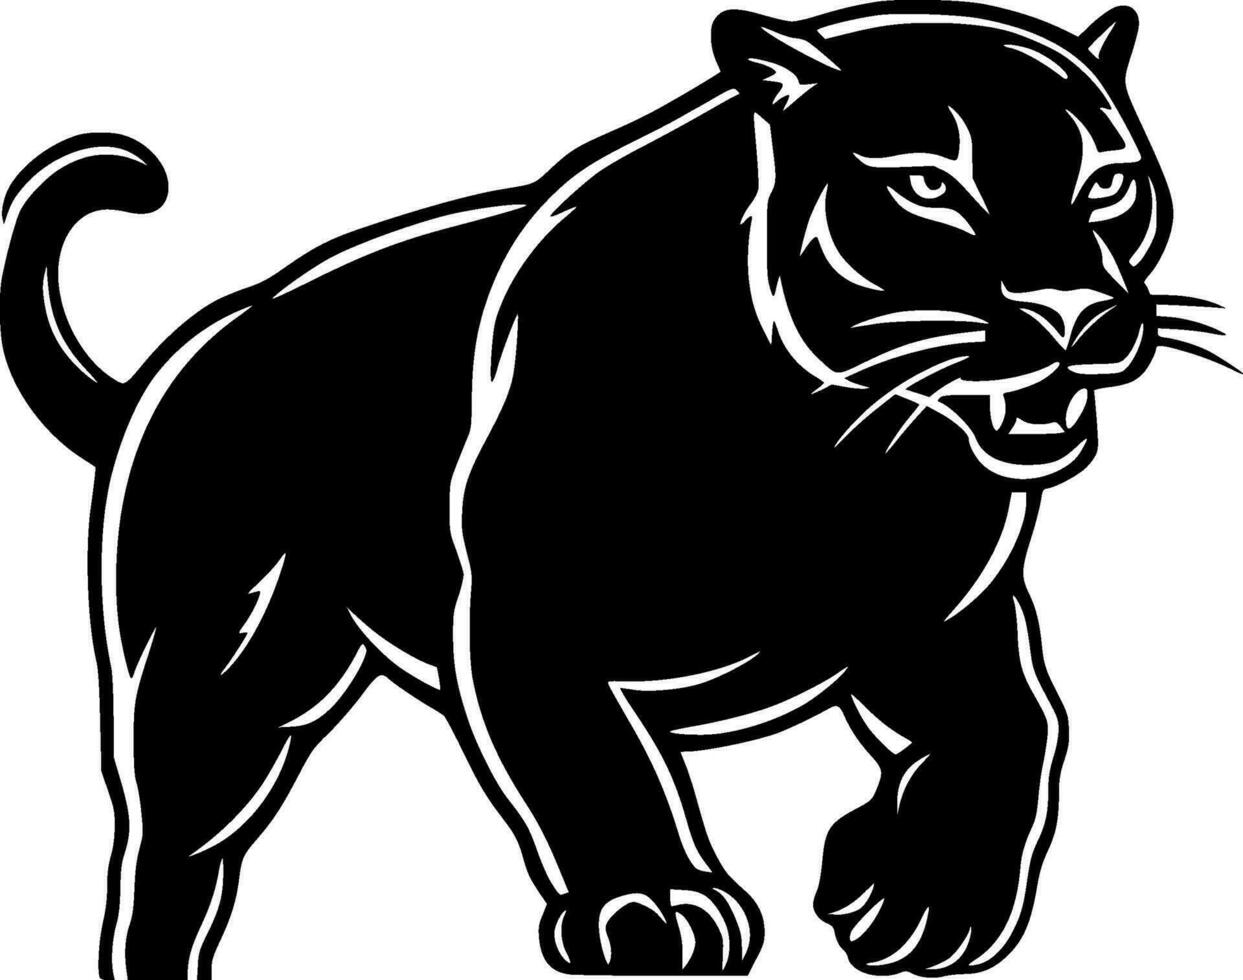 Panther - Minimalist and Flat Logo - Vector illustration